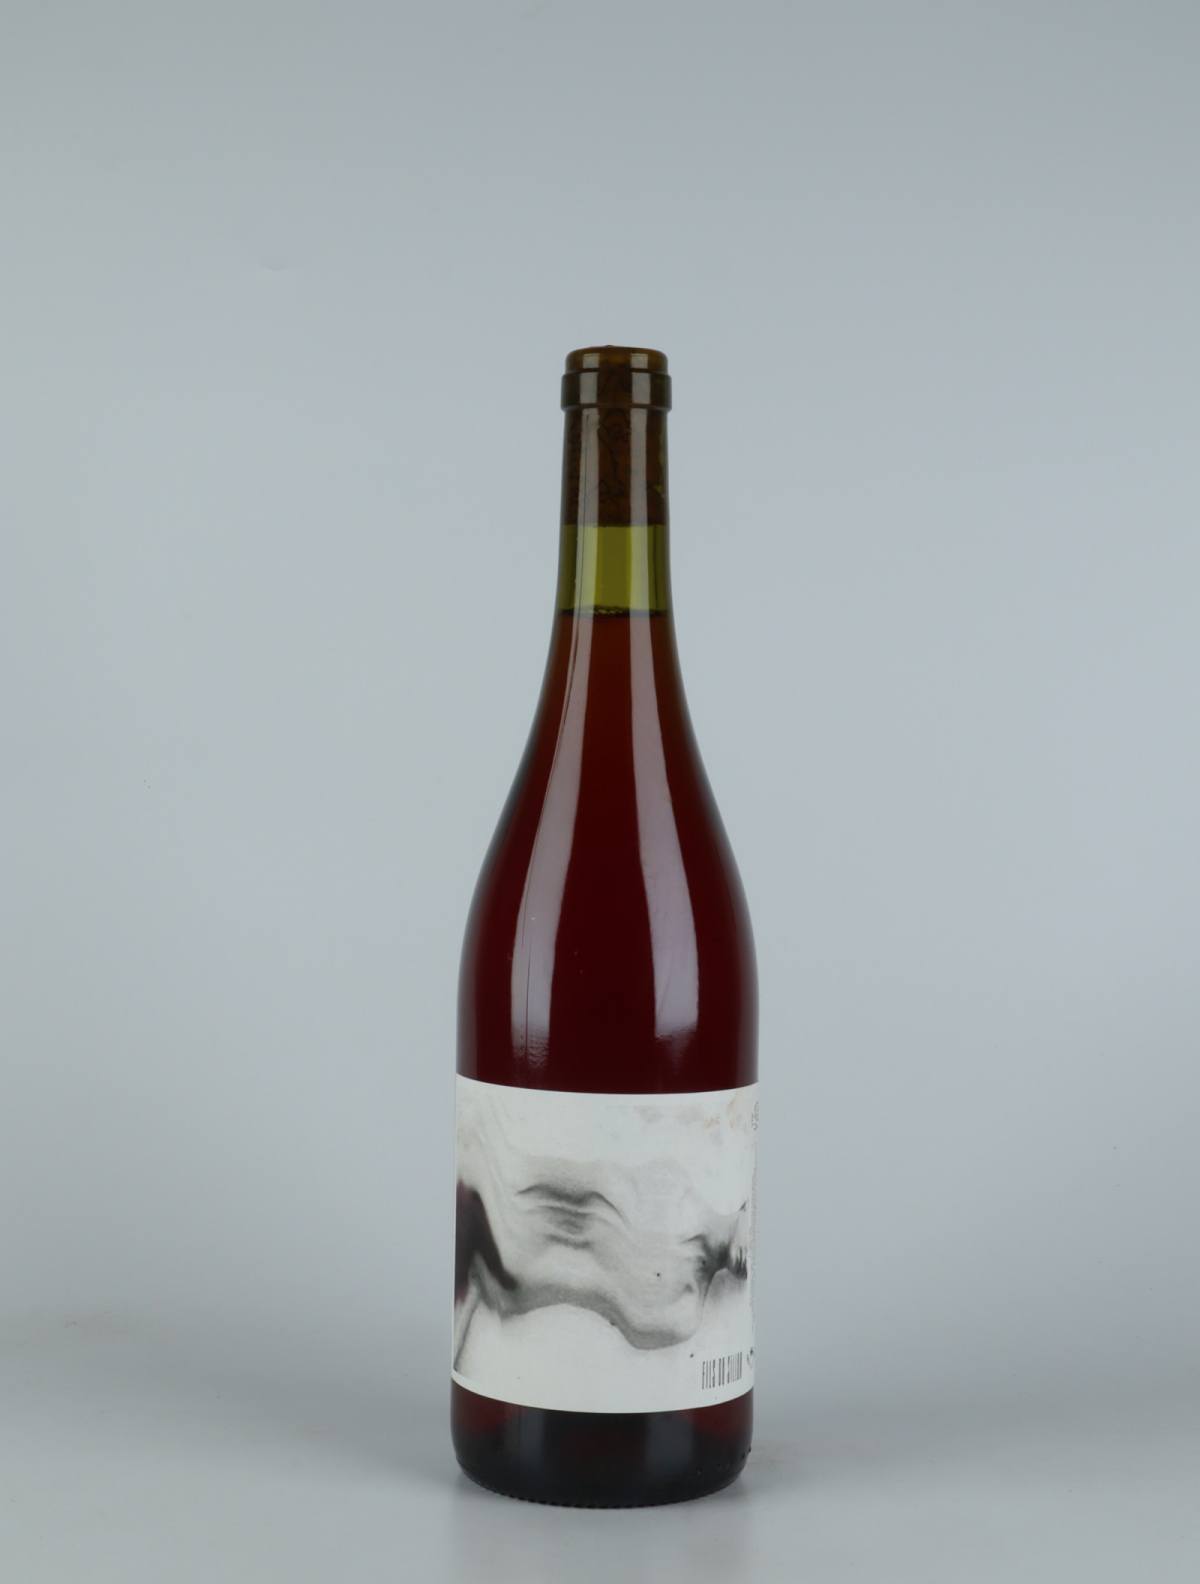 A bottle 2021 Fils du Sillon Rosé from Ad Vinum, Gard in France